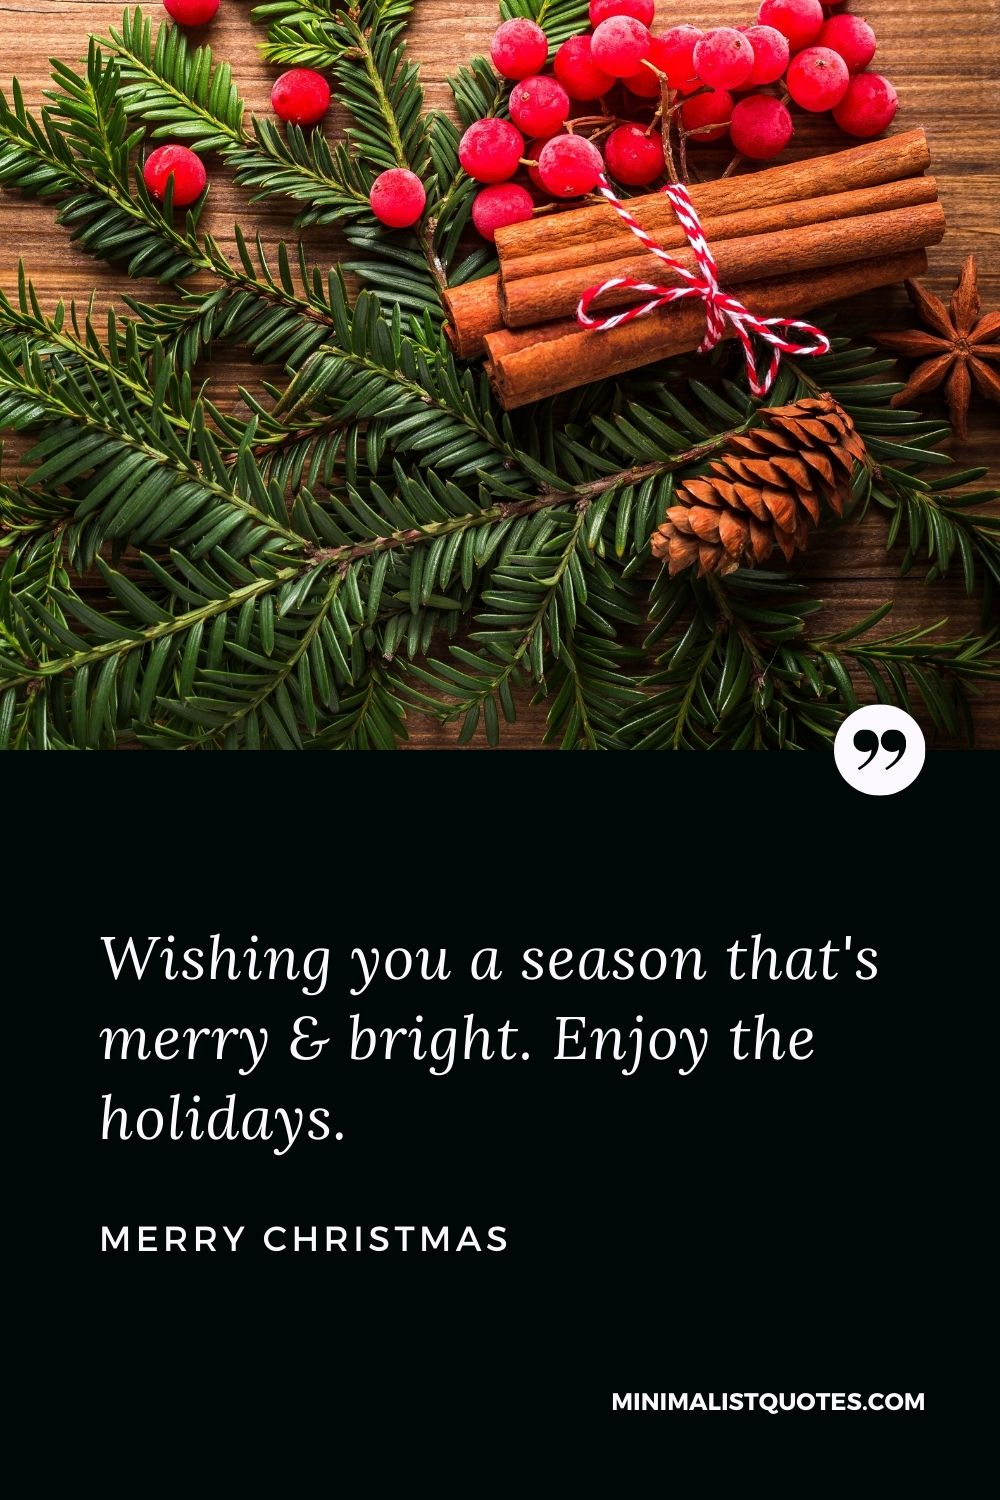 Merry Christmas Wish - Wishing you a season that's merry & bright. Enjoy the holidays.